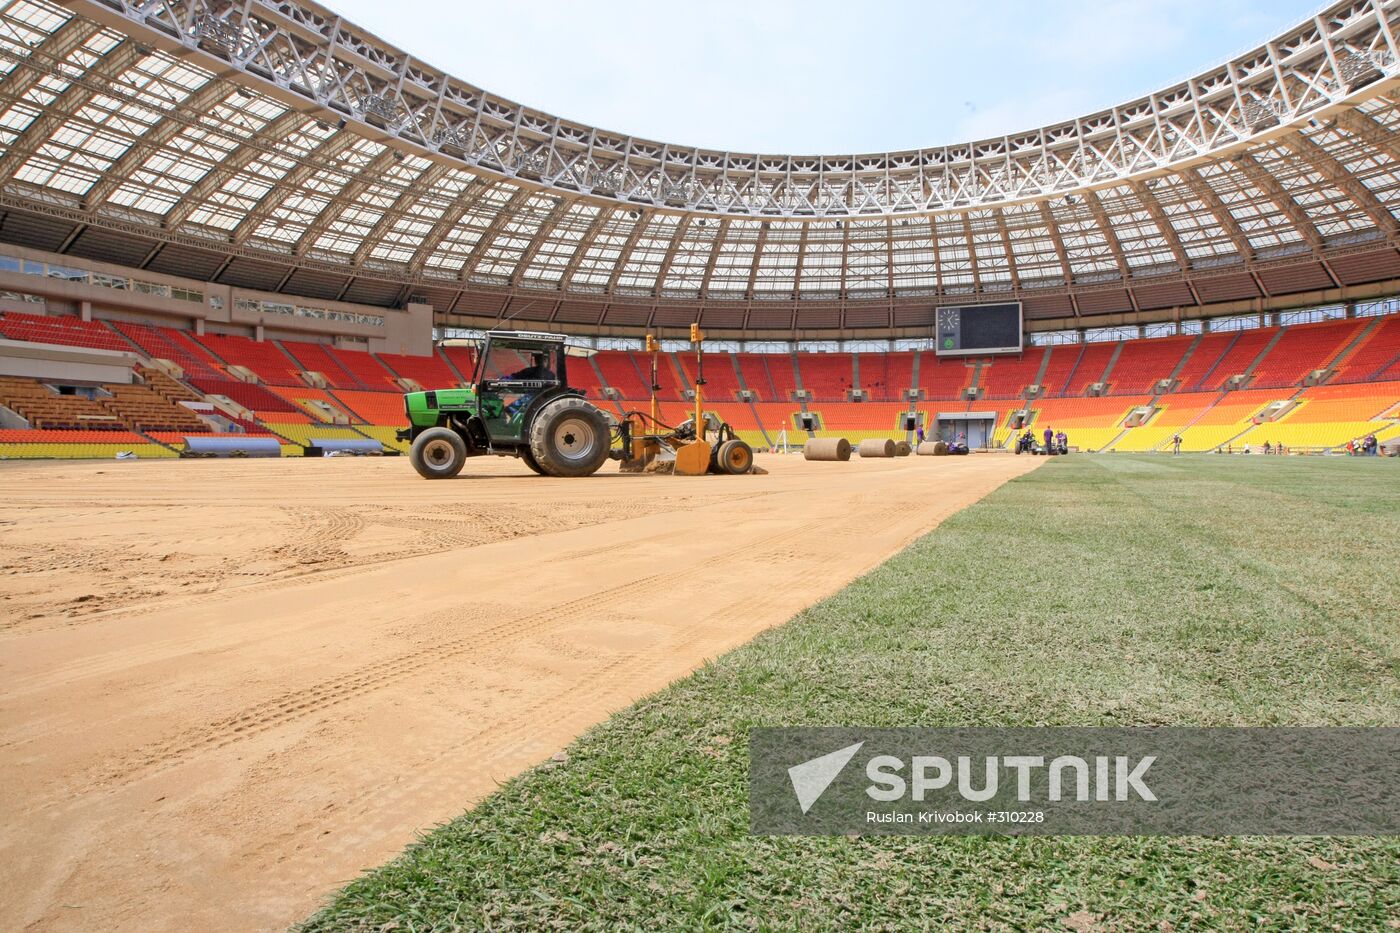 Establishing a lawn at the Luzhniki Stadium